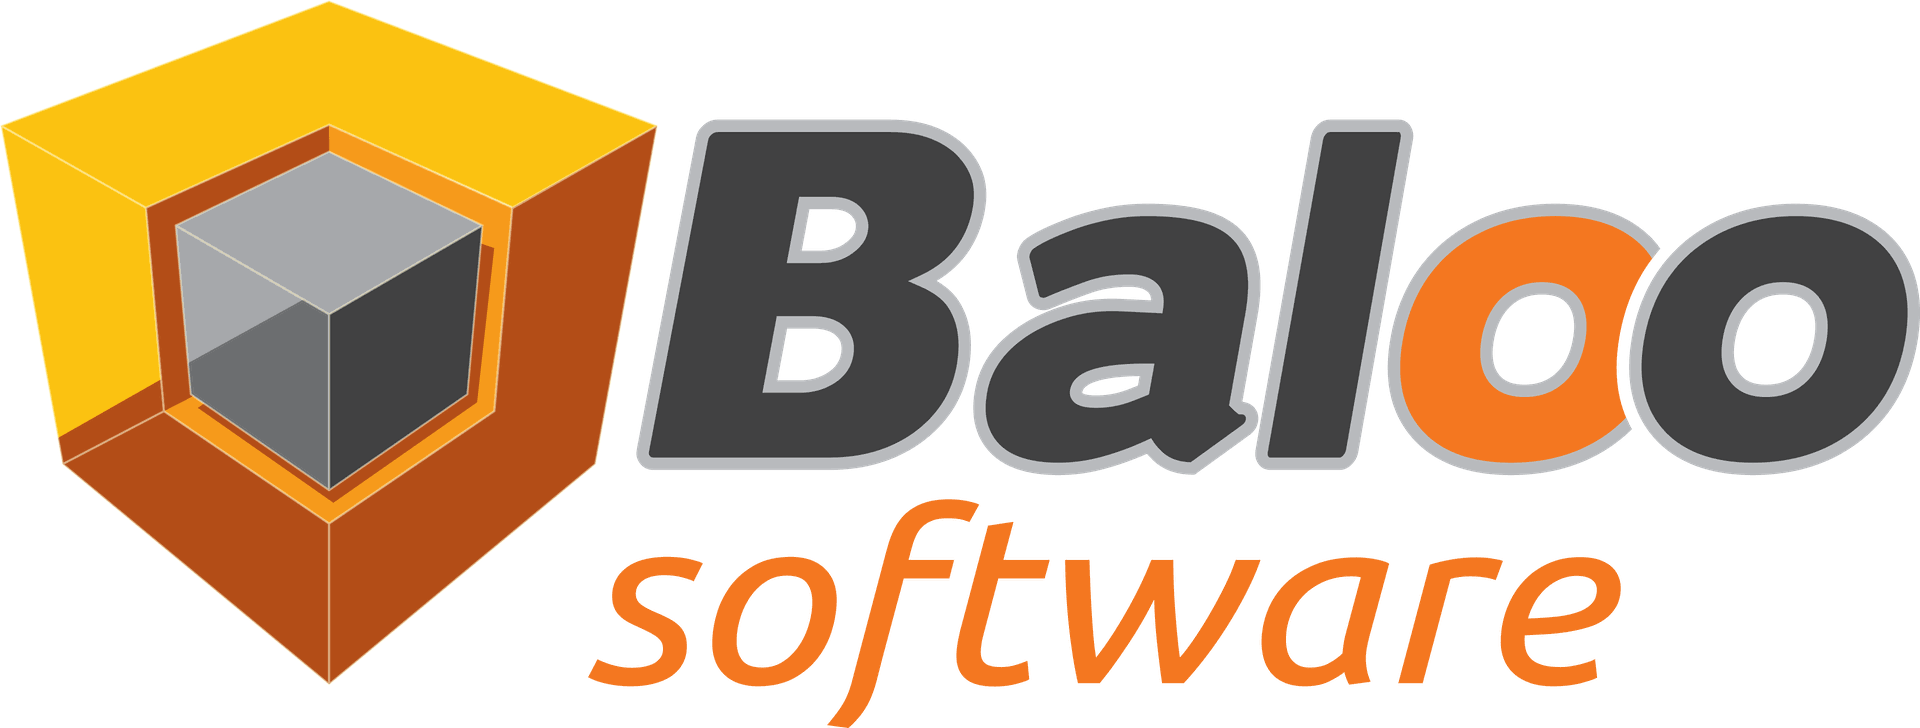 BalooSoftware